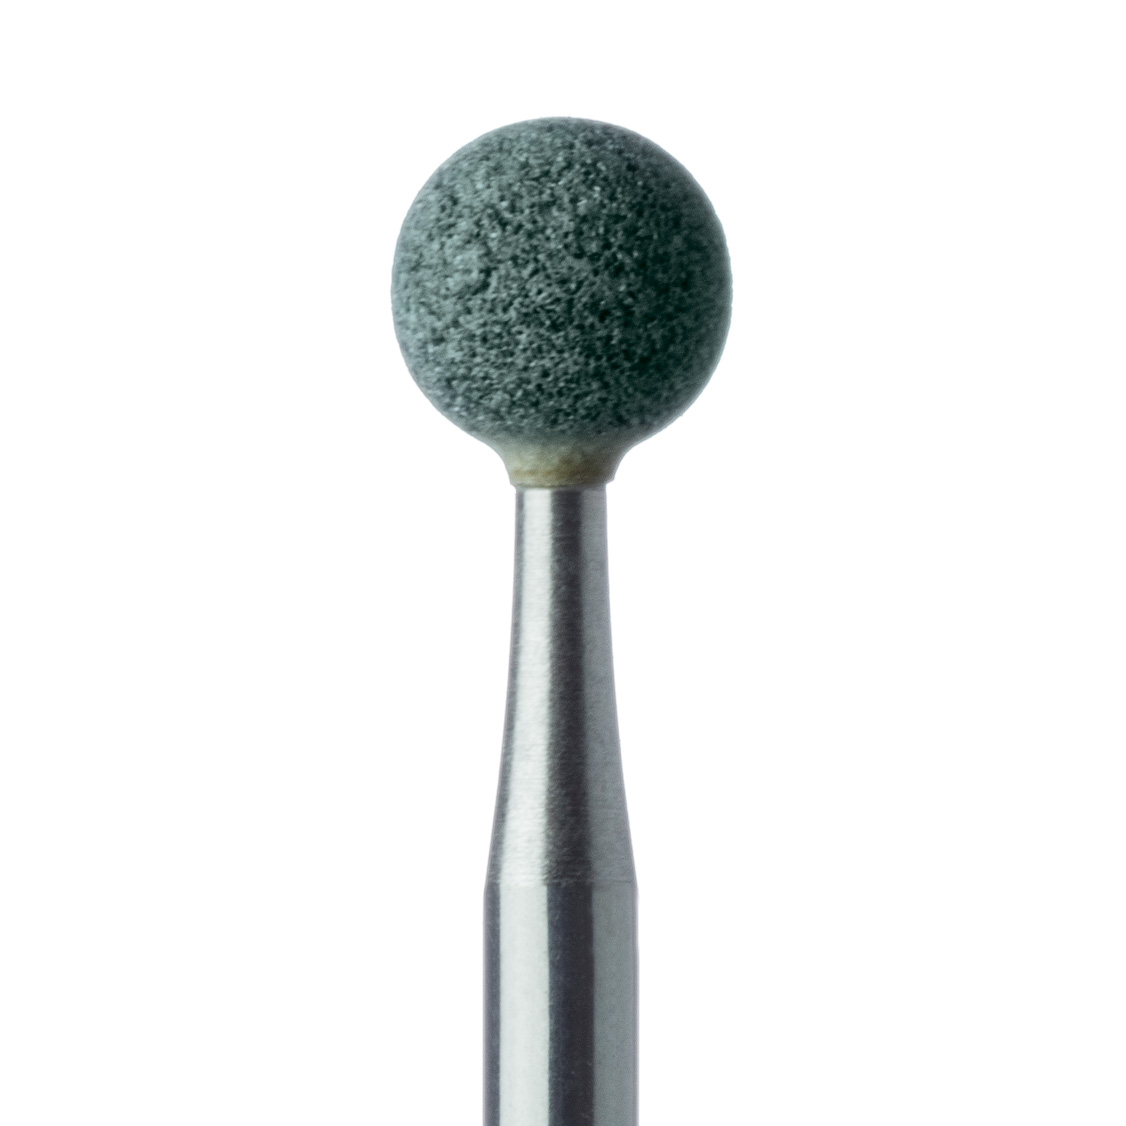 603-050-RA-GRN Abrasive, Green, Round, 5mm Ø, Medium, RA